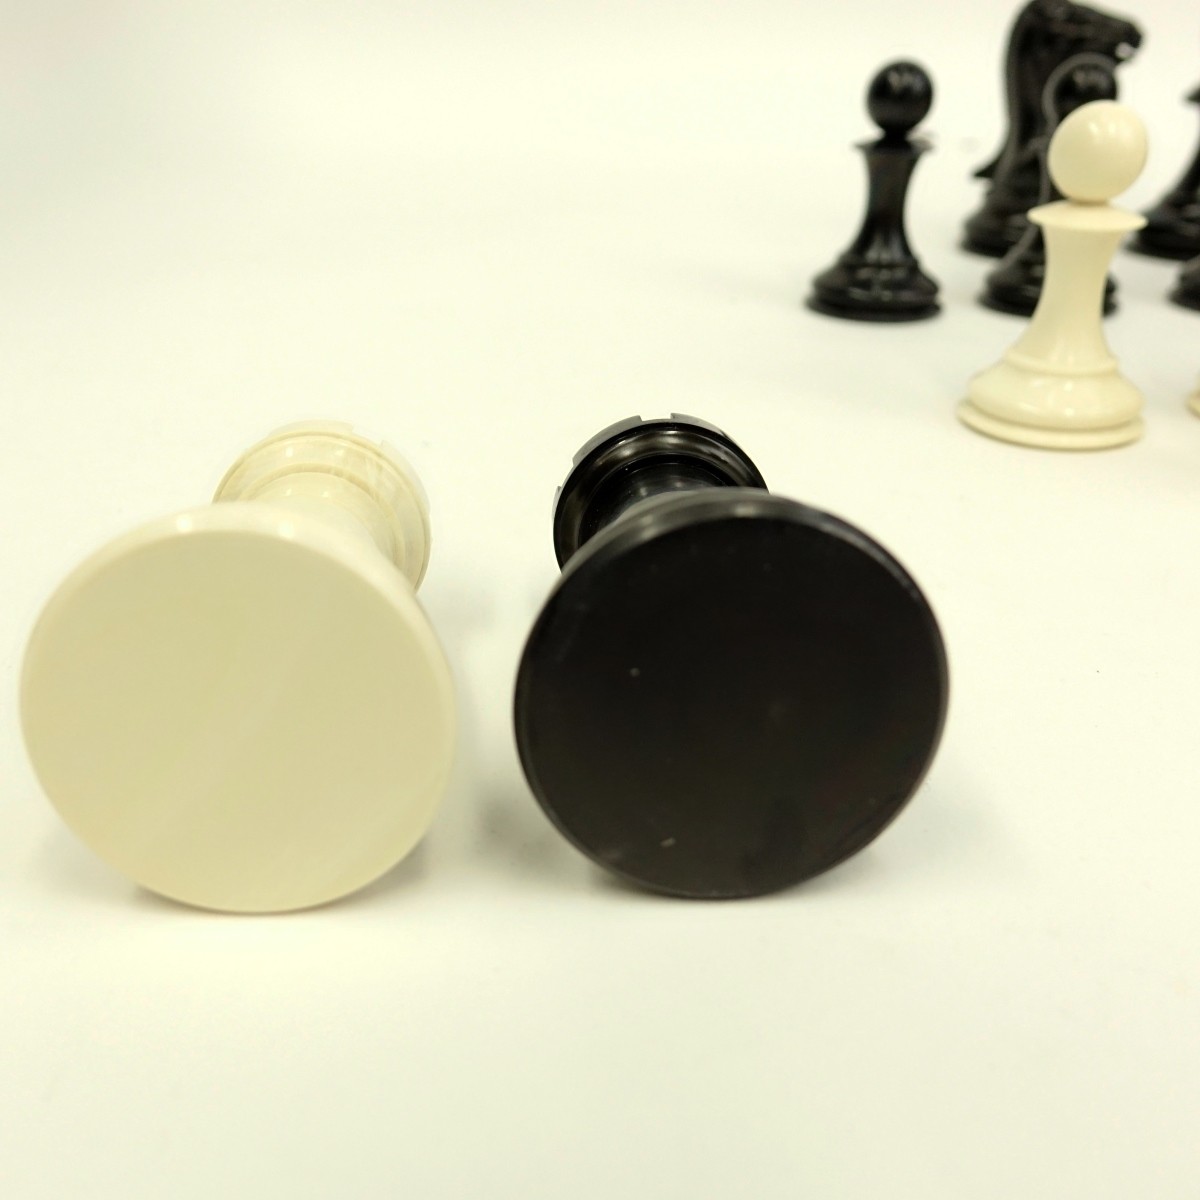 House Of Staunton Ivory Chess Set